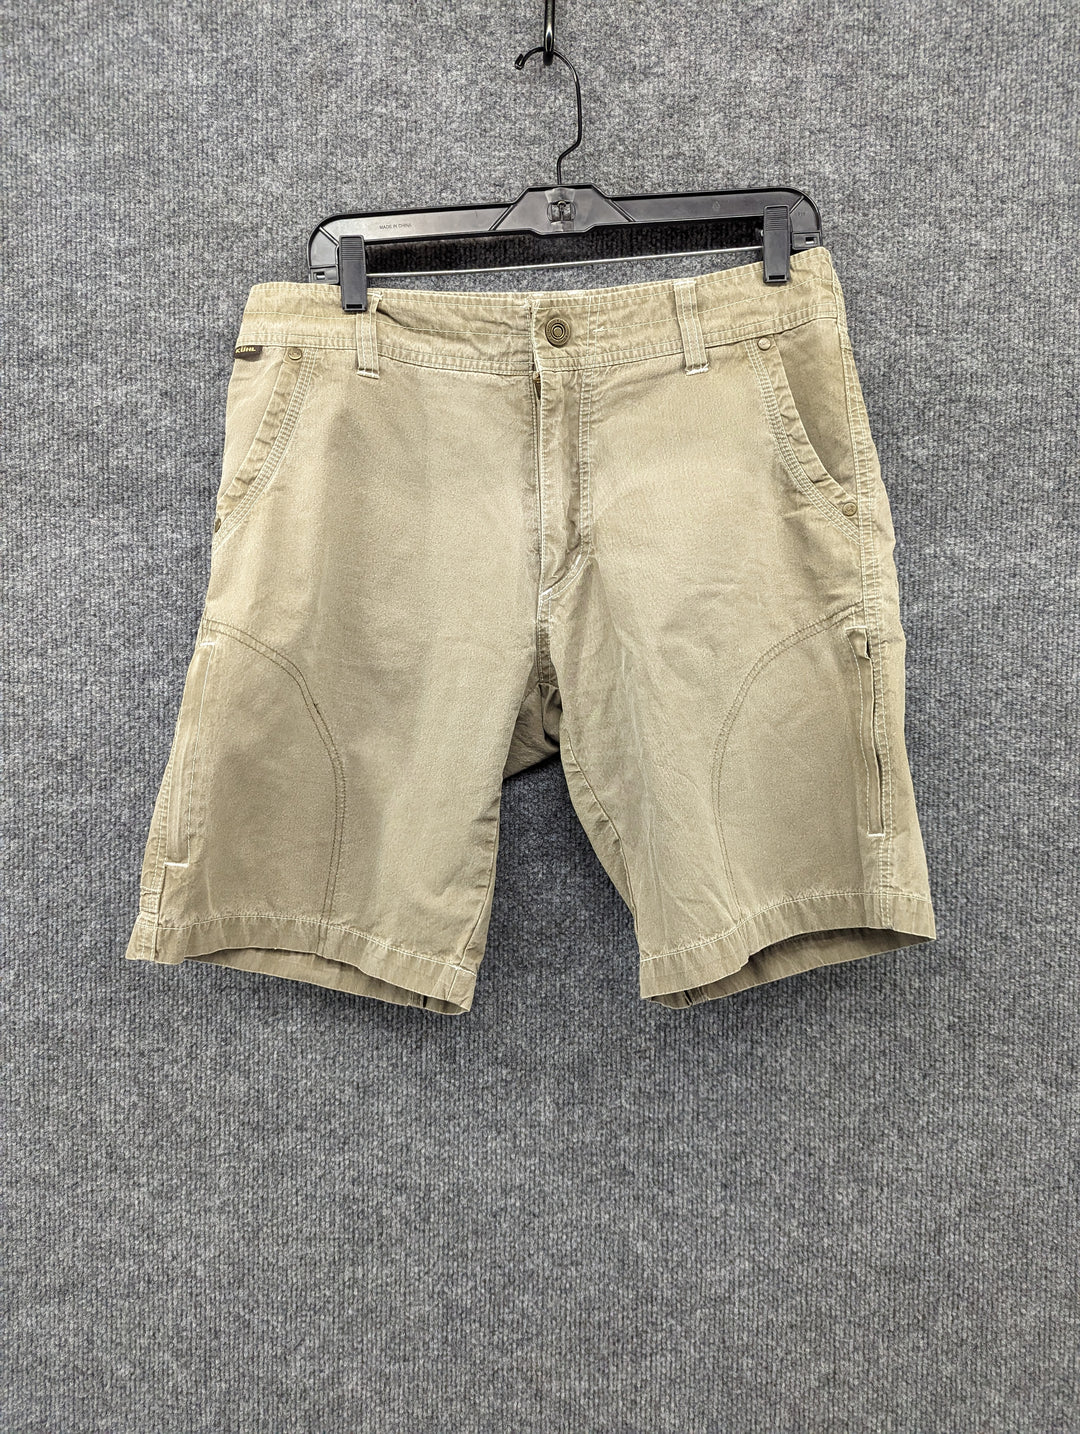 Kuhl Size 32 Men's Casual Shorts